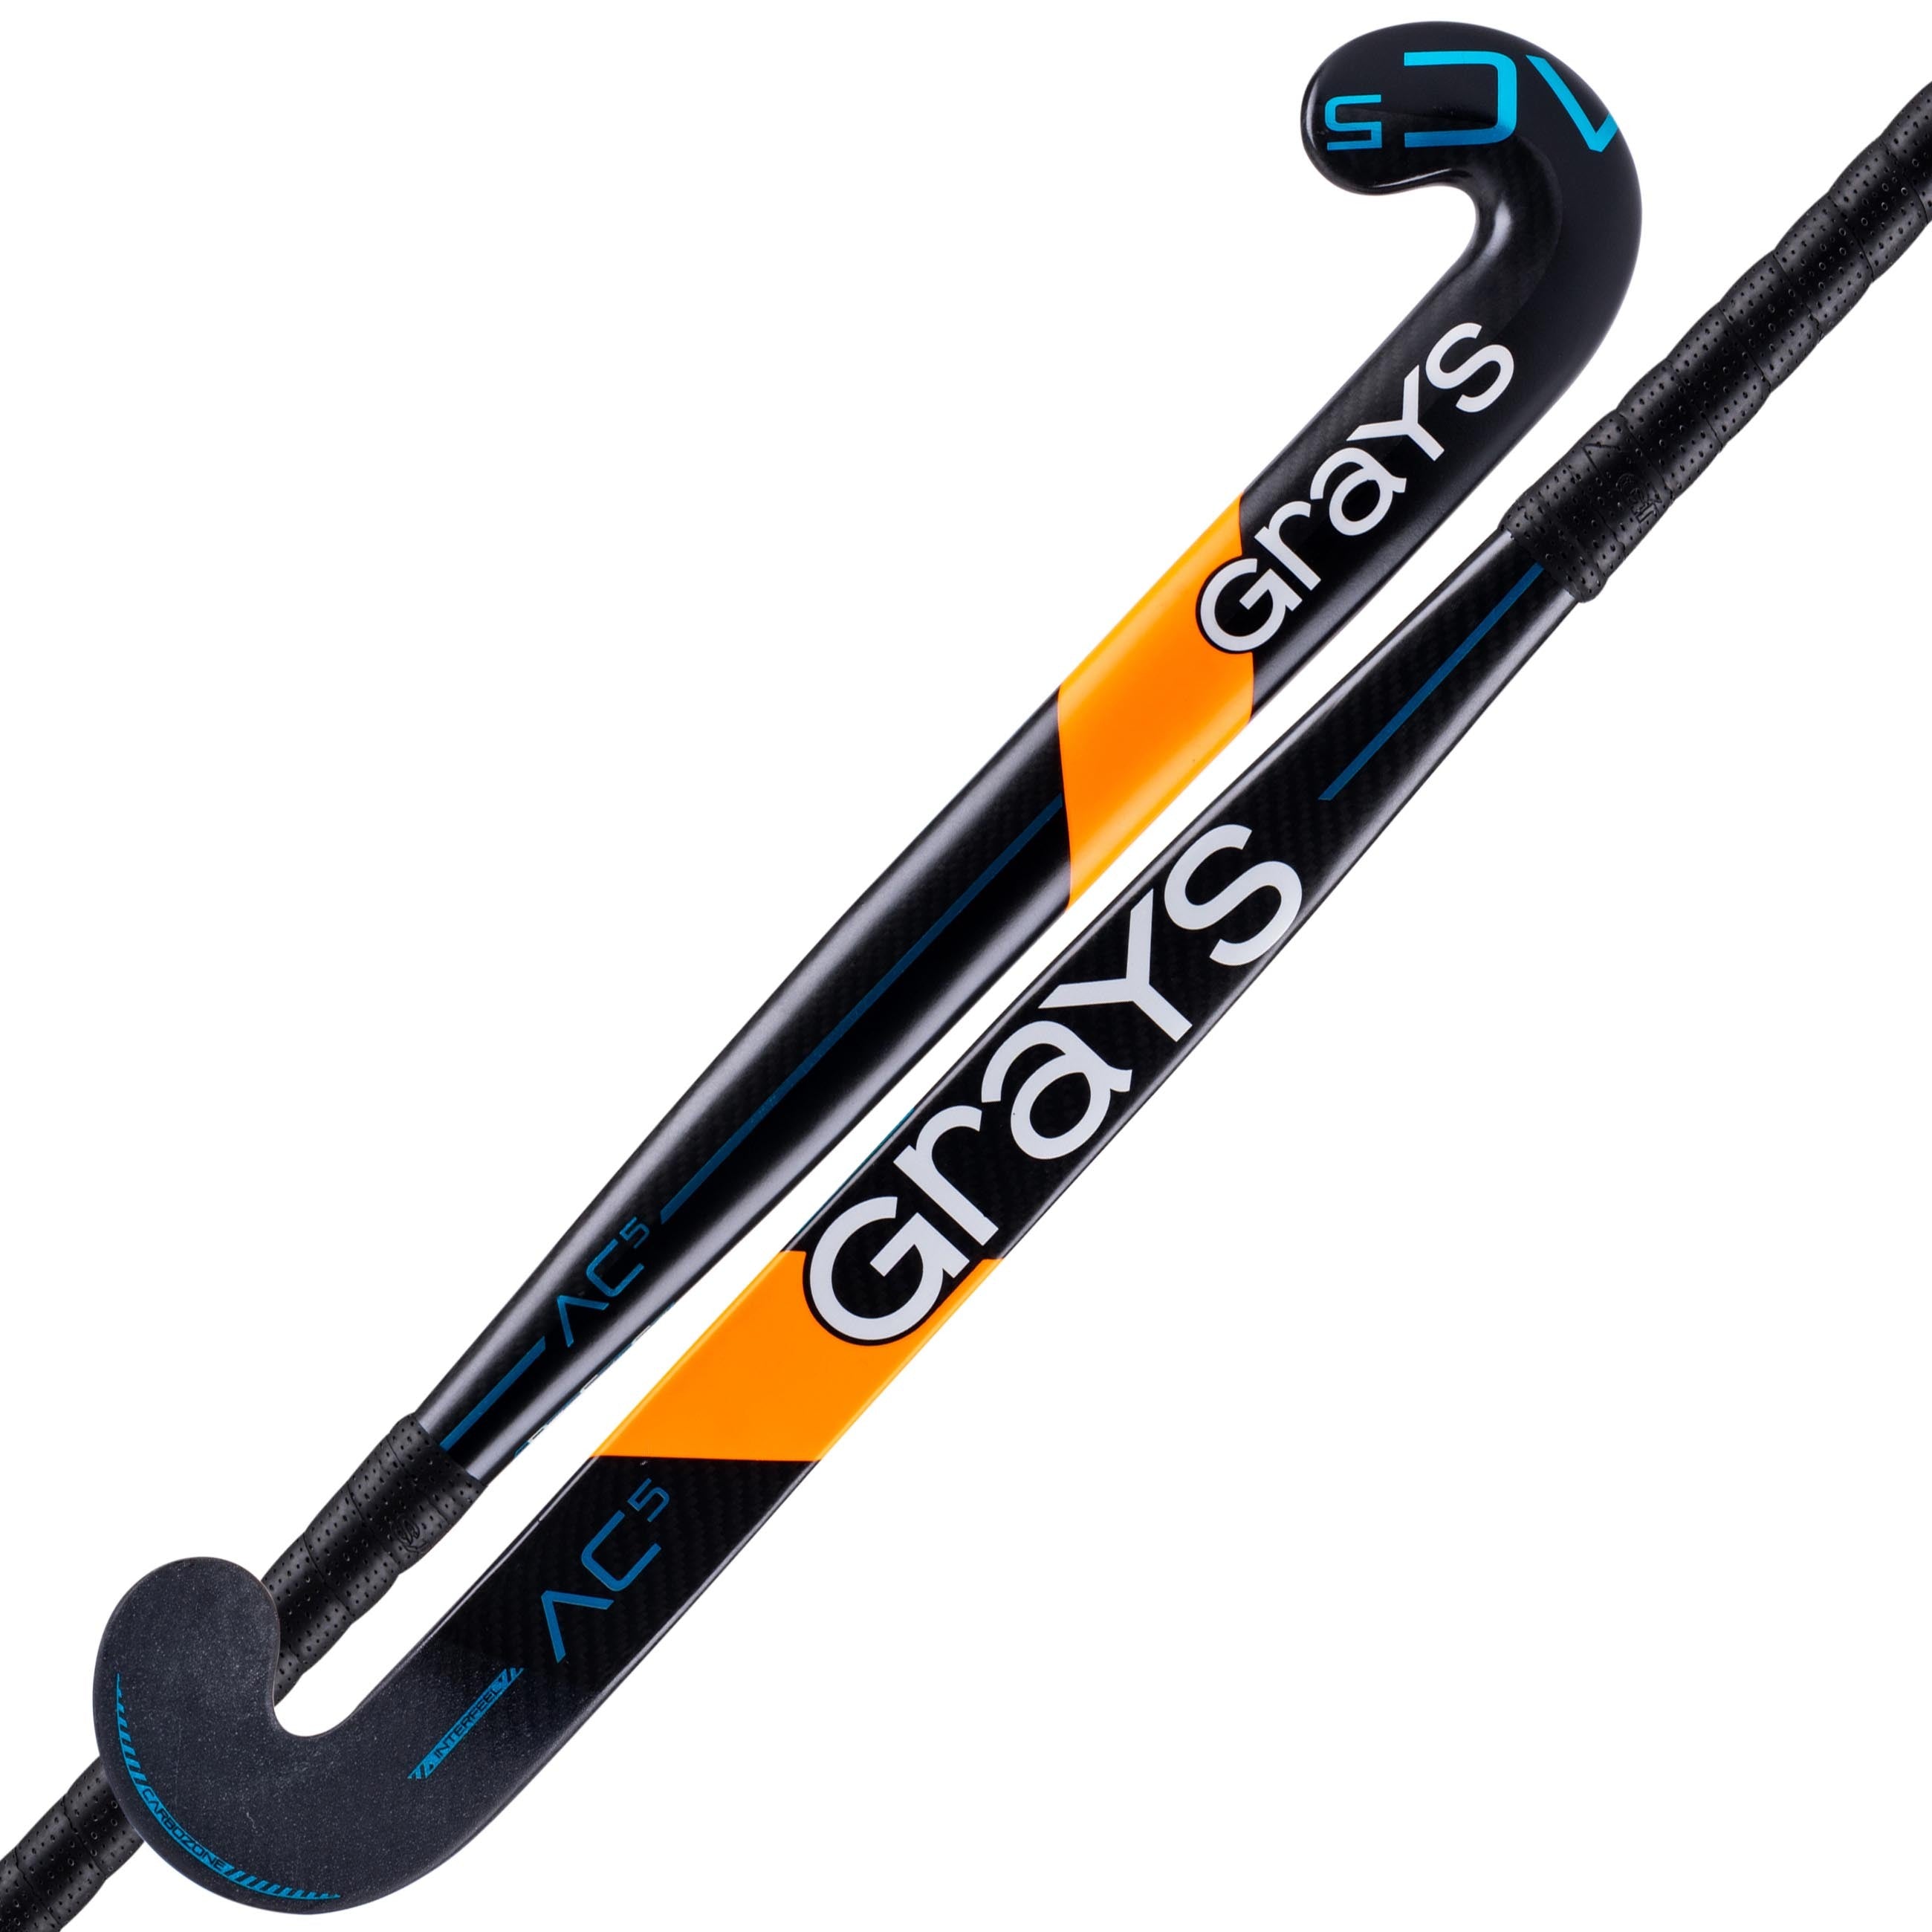 AC5 Dynabow composite hockeystick